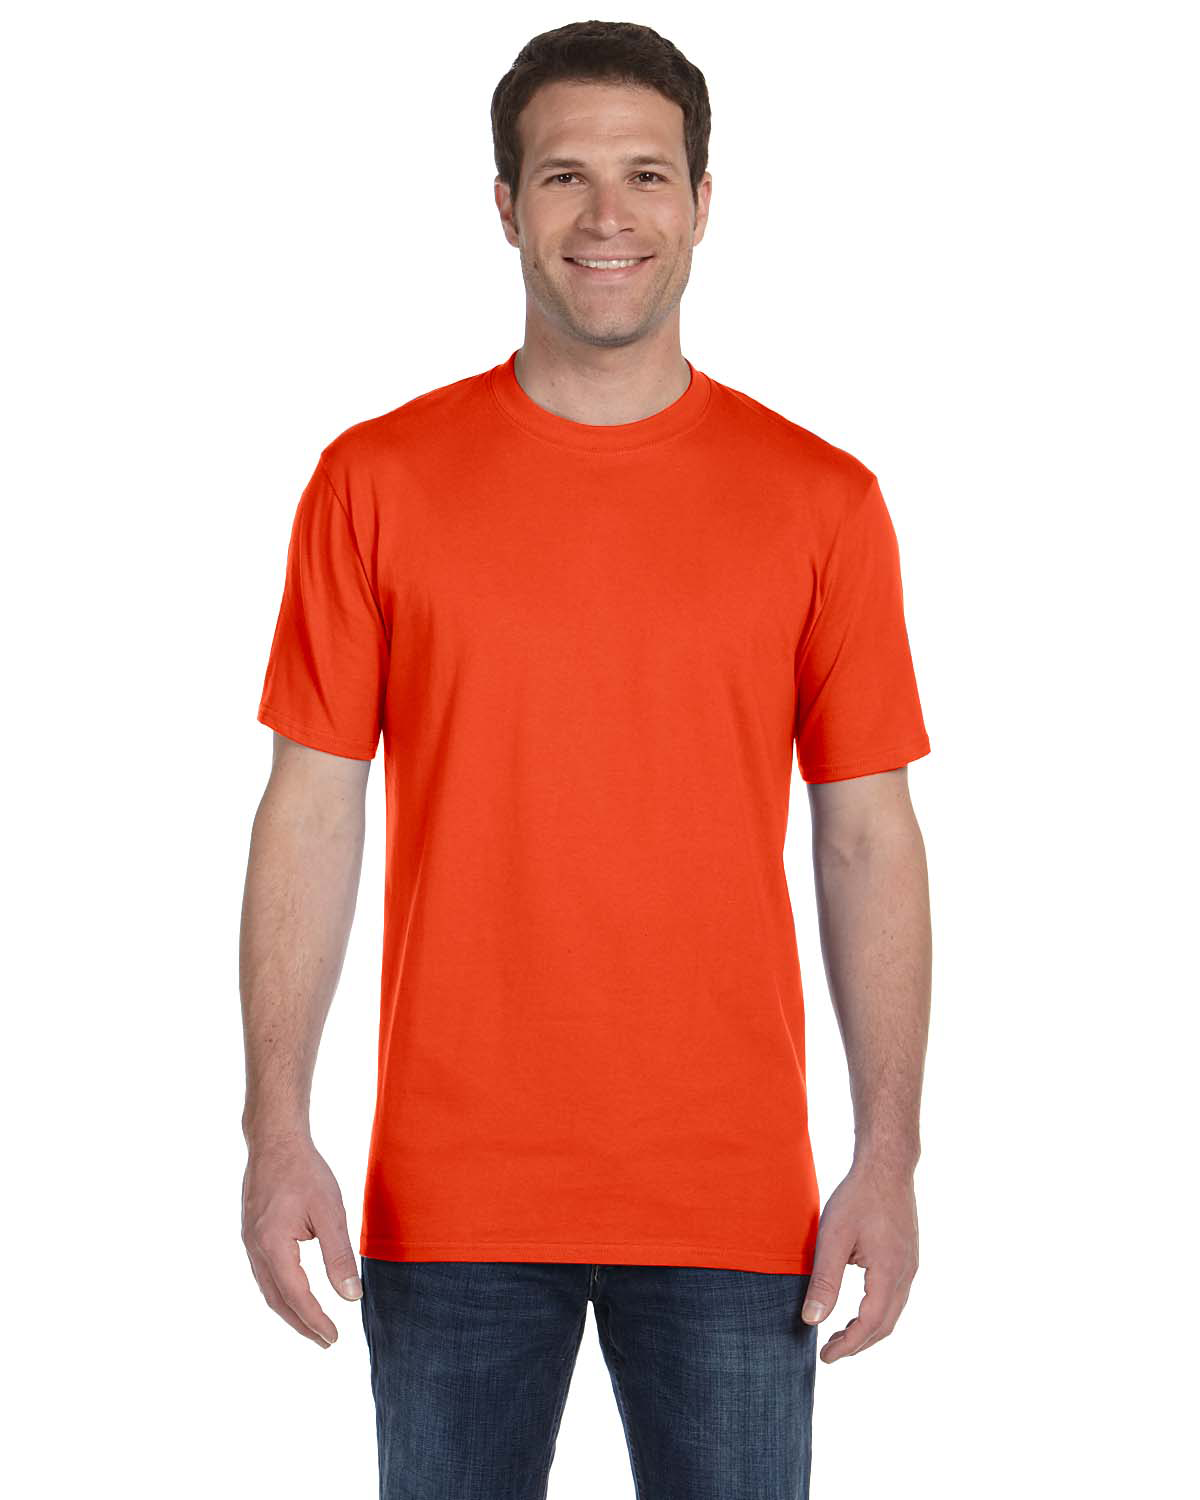 Wholesale T-Shirts | Shop Bulk T-Shirts